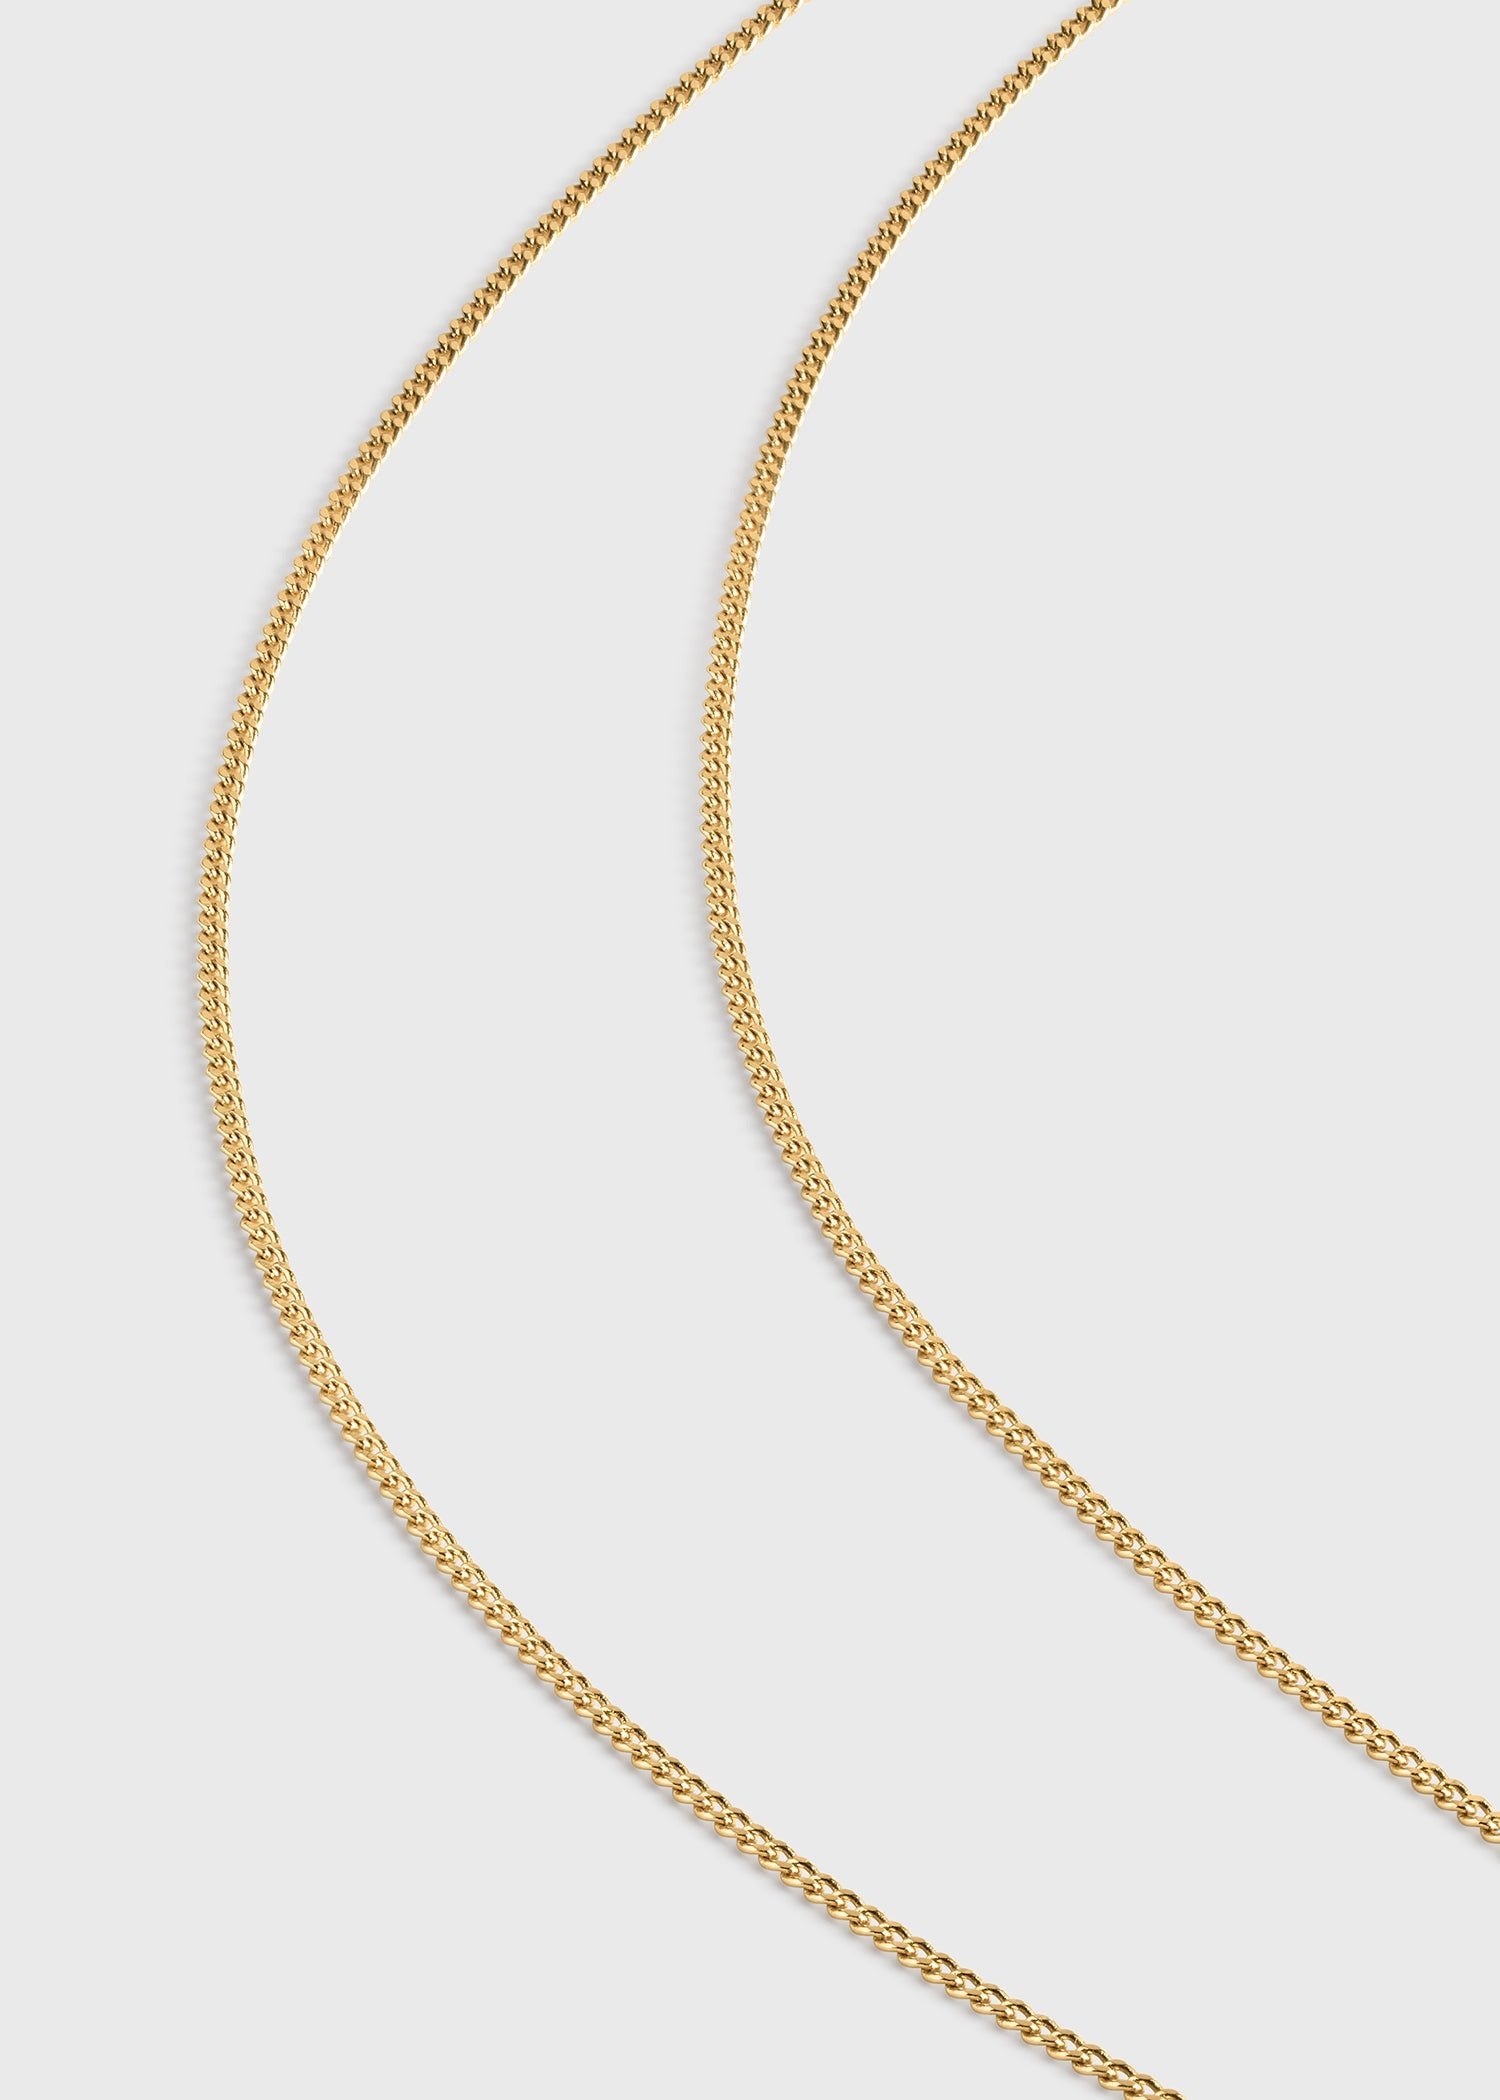 Long jasper necklace black/off white - 4